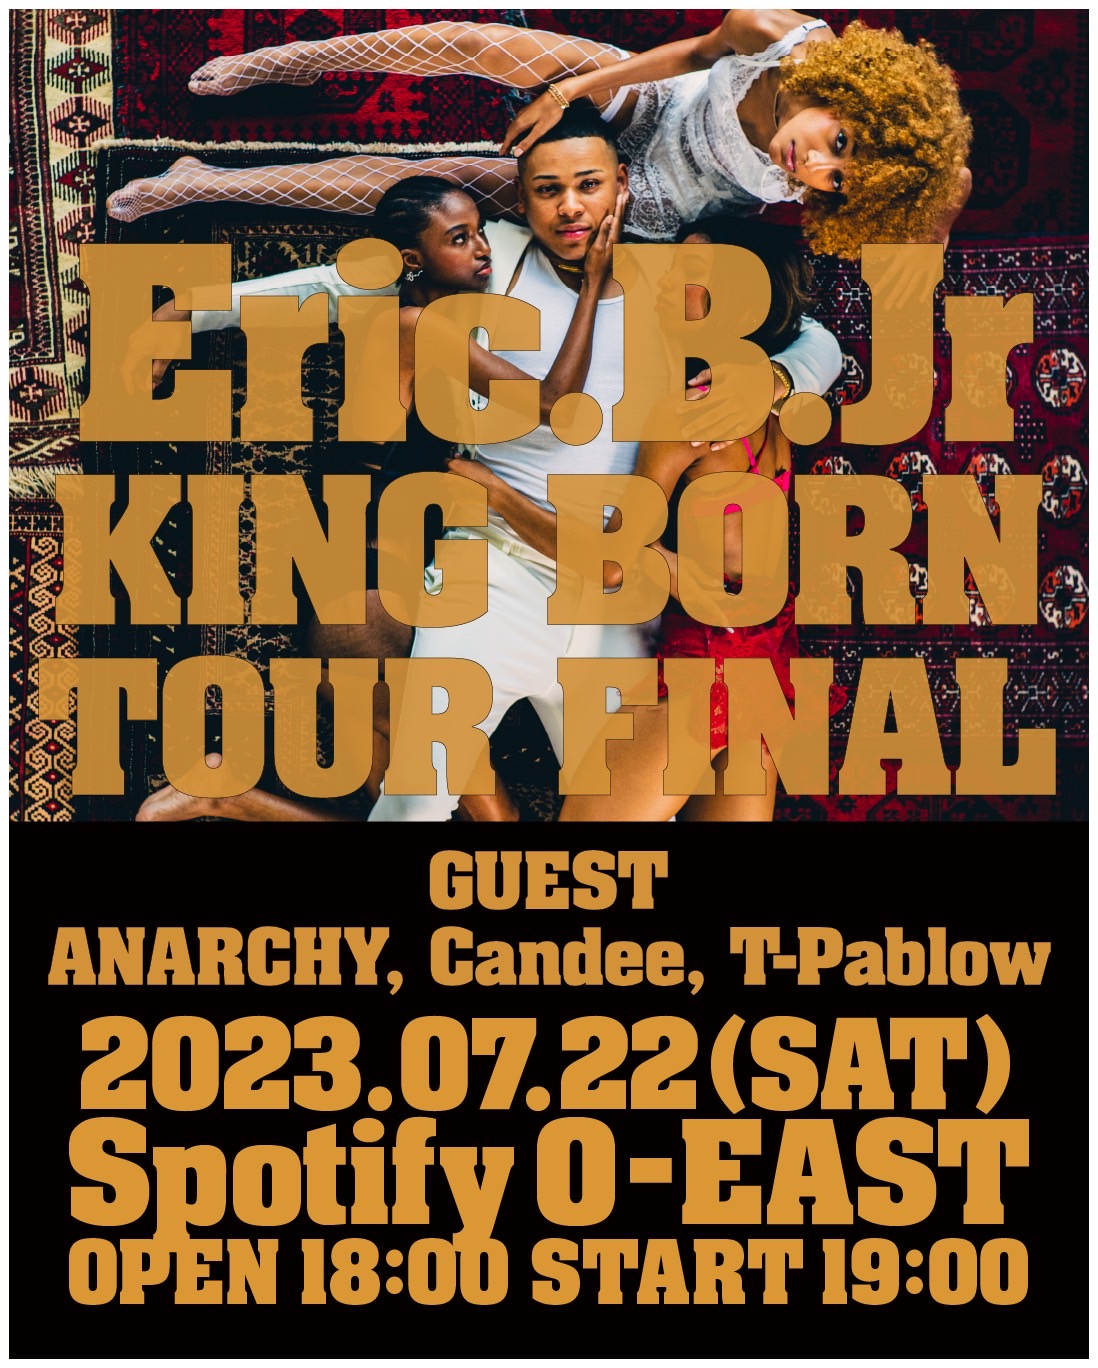 Eric.B.Jr KING BORN RELEASE LIVE TOUR